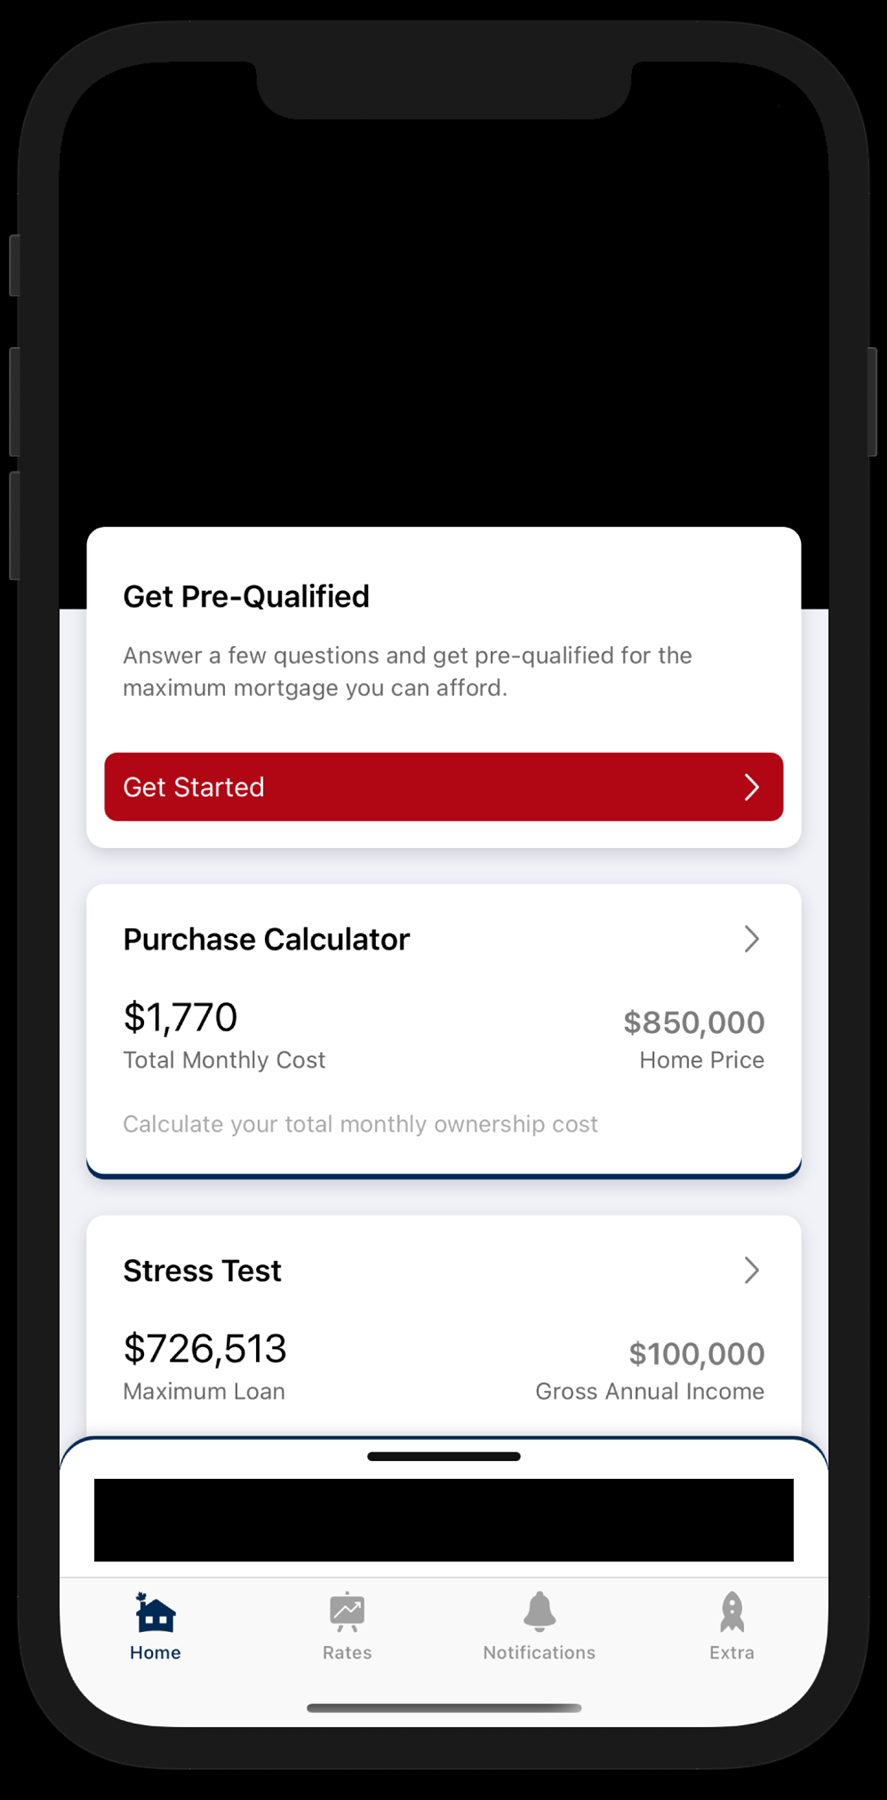 My Mortgage Toolbox #1 Mortgage App/Calculator